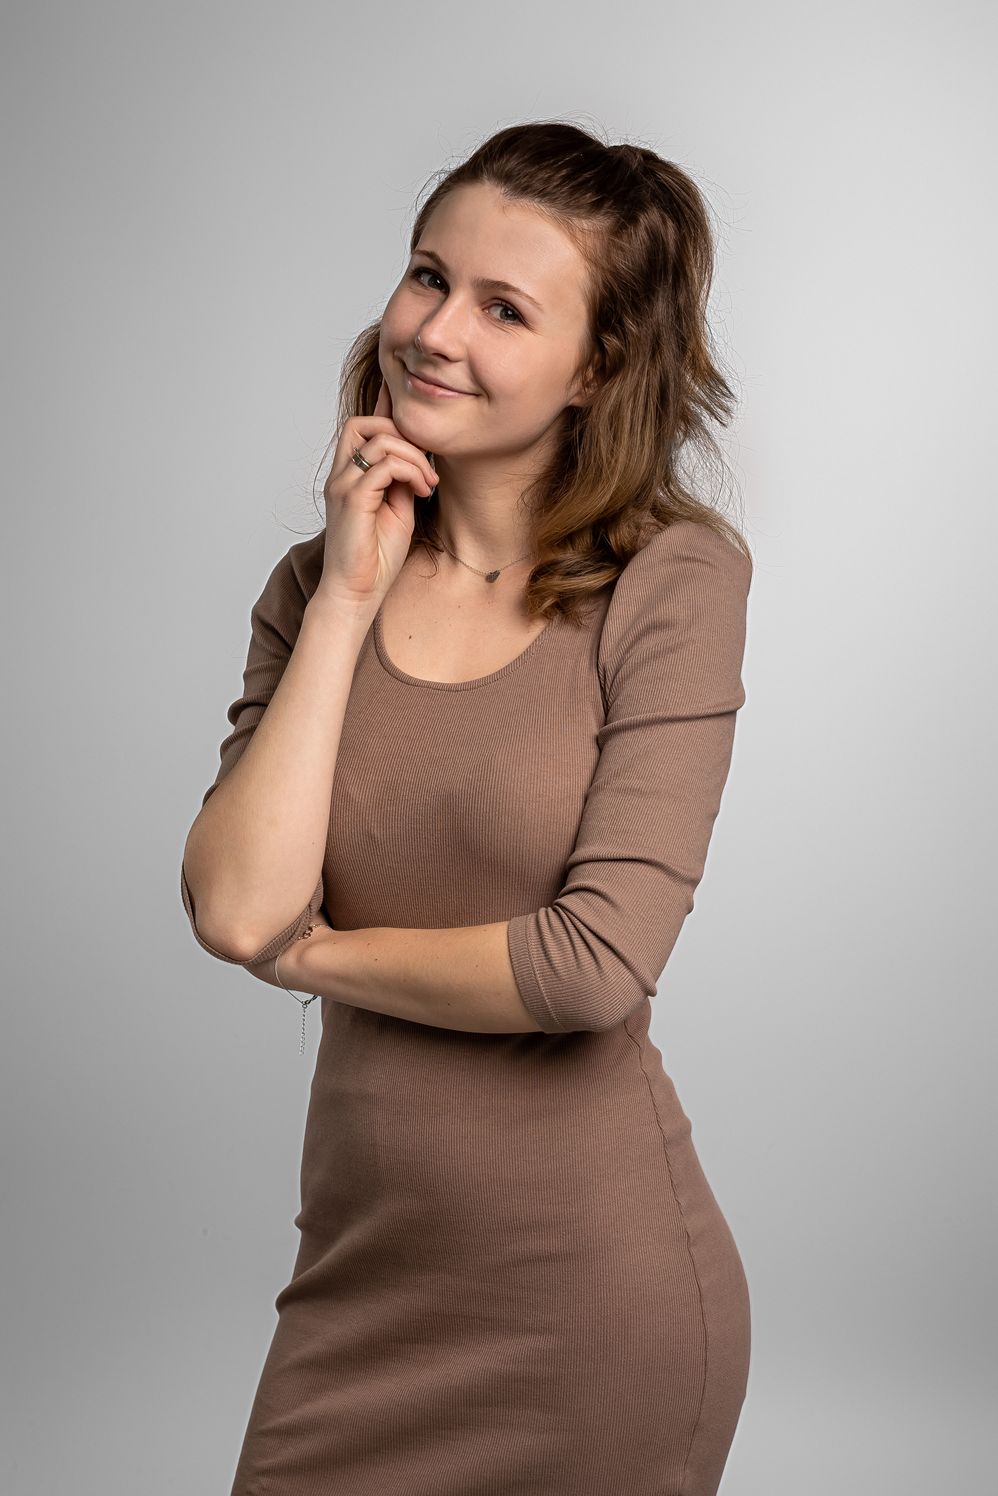 Katarzyna Jakubiec, Office Manager at 4Experience